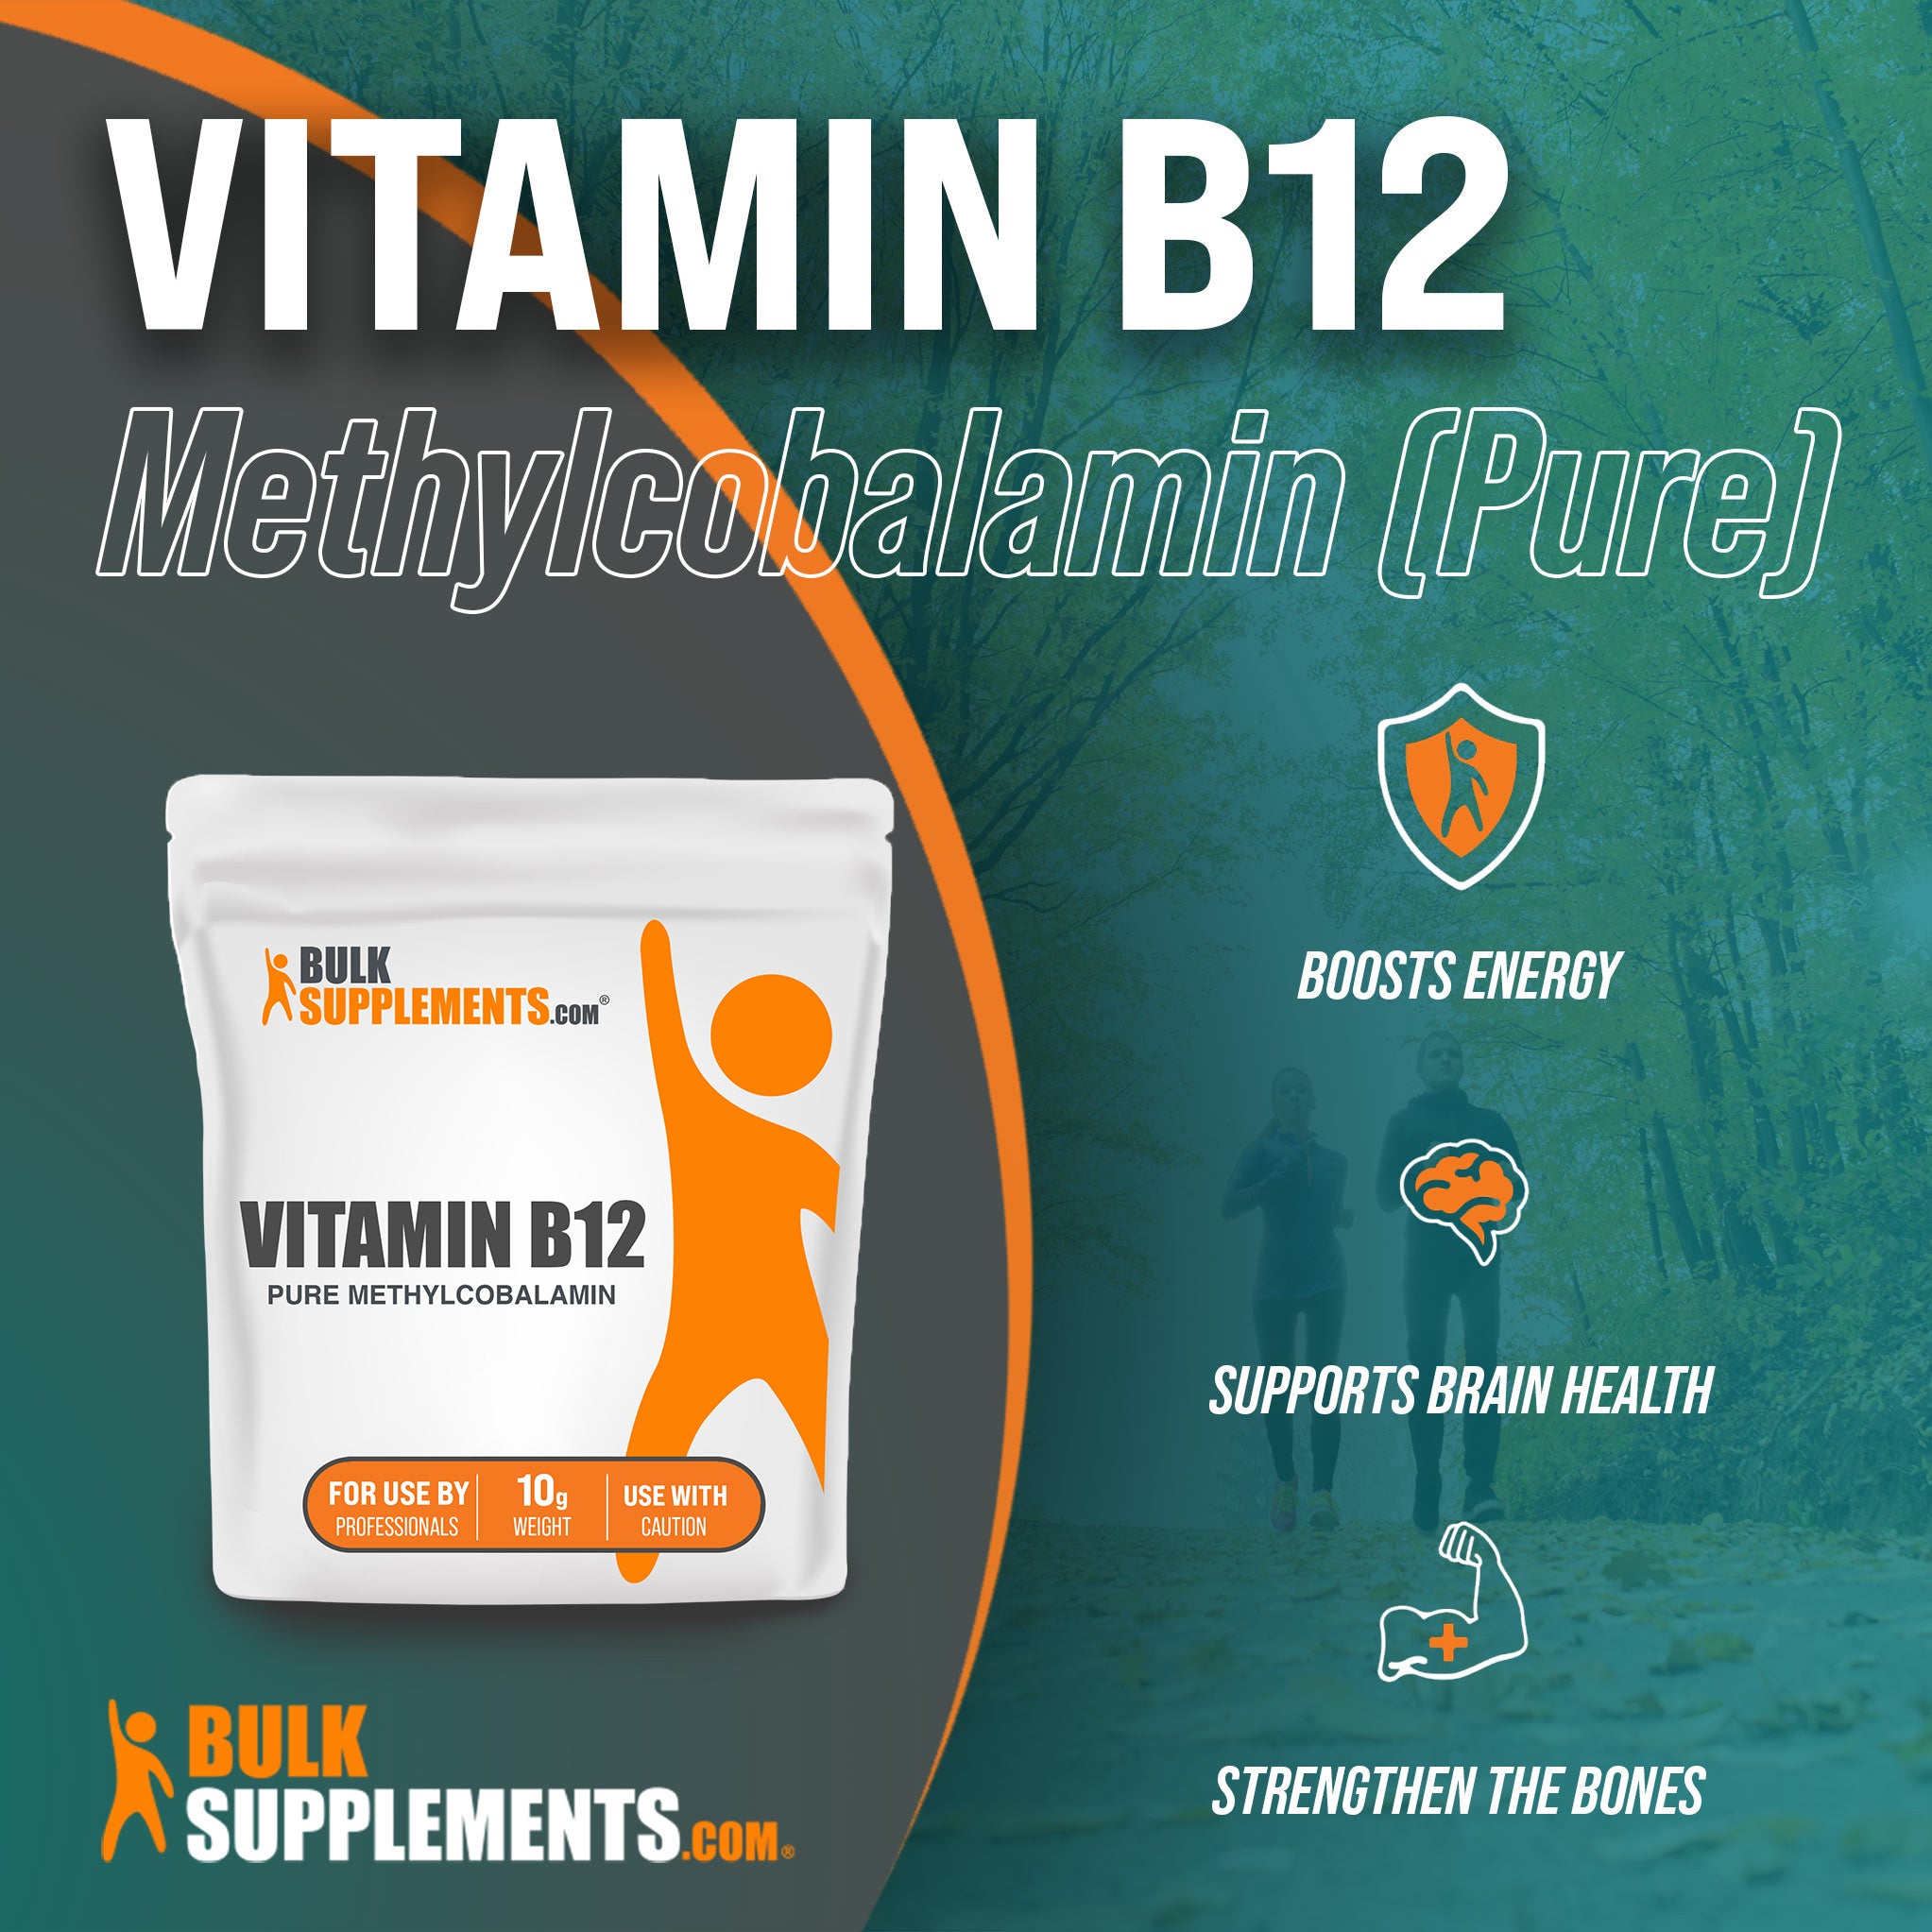 Benefits of Vitamin B12 Pure Methylcobalamin: boosts energy, supports brain health, strengthen the bones